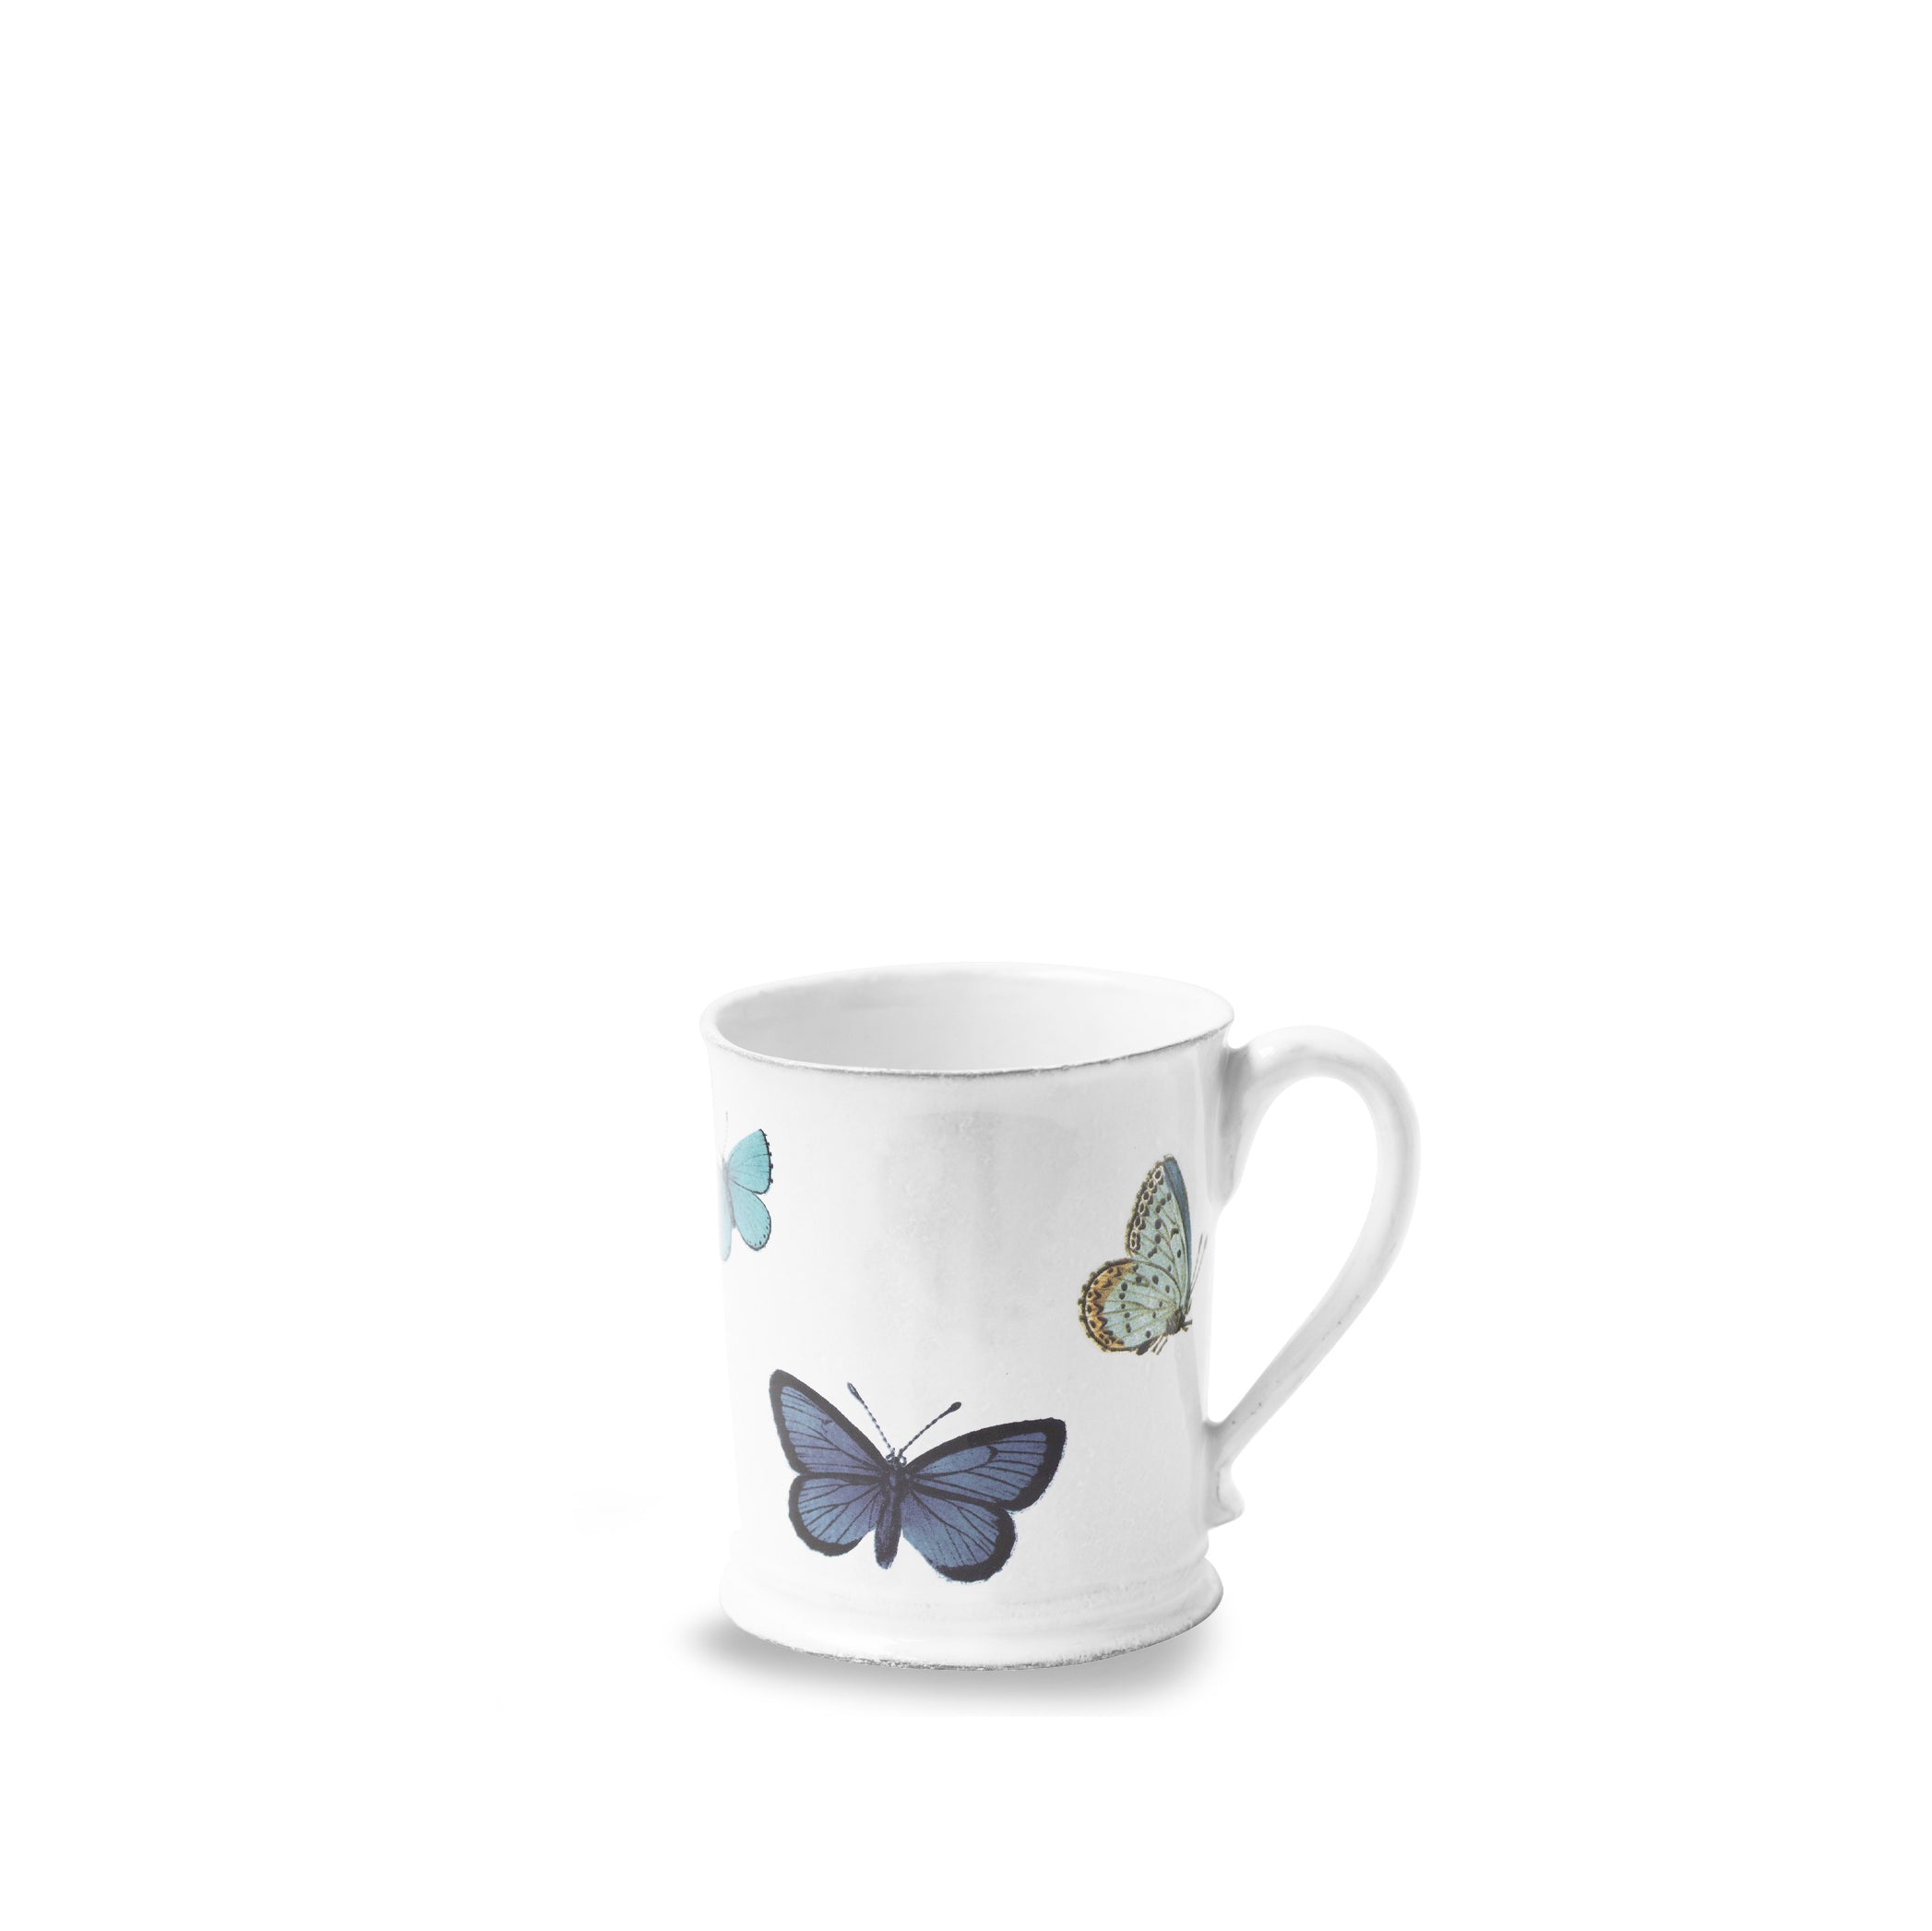 Small Adonis Blue Butterfly Mug by Astier de Villatte, 11 cm